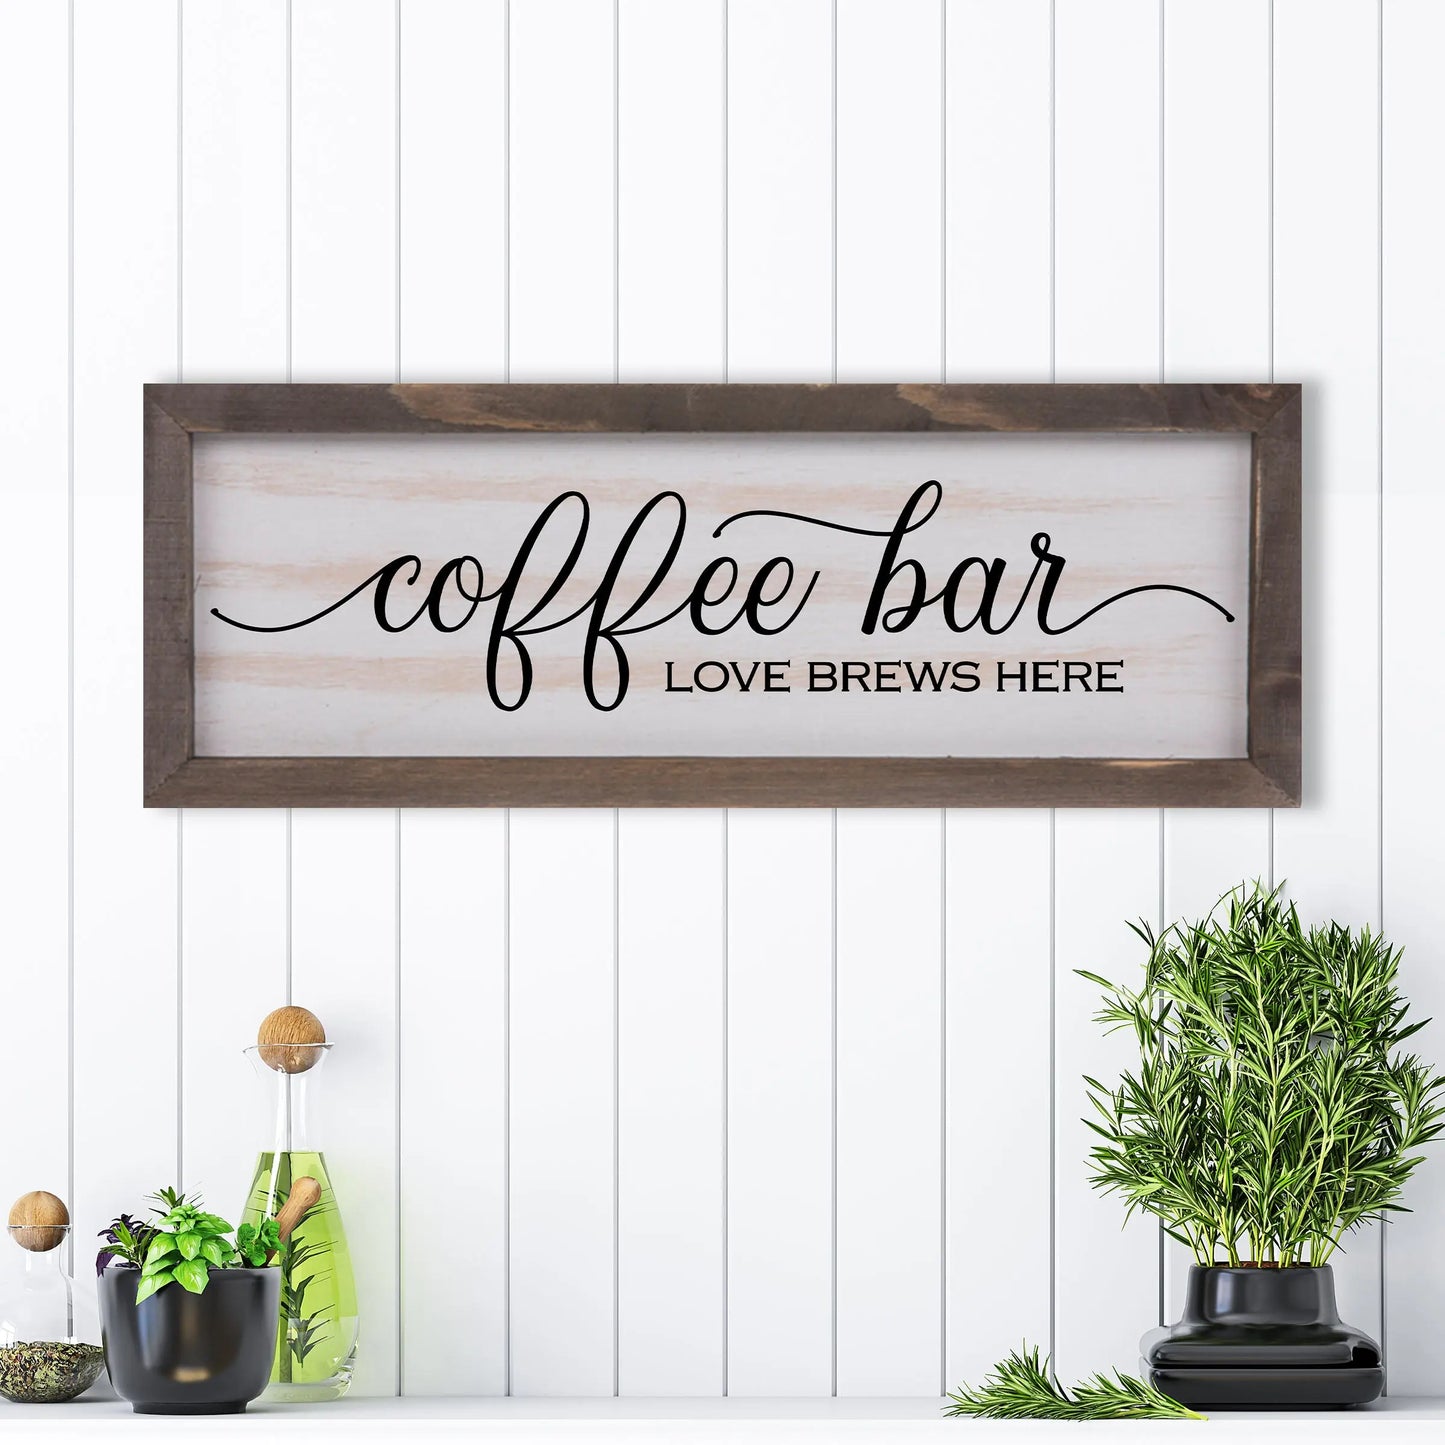 Coffee Bar, Love Brews Here Rustic Whitewashed Wood Frame Sign | 5.5" x 15" Farmhouse Decor | Christian Wood Decor amazingfaithdesigns